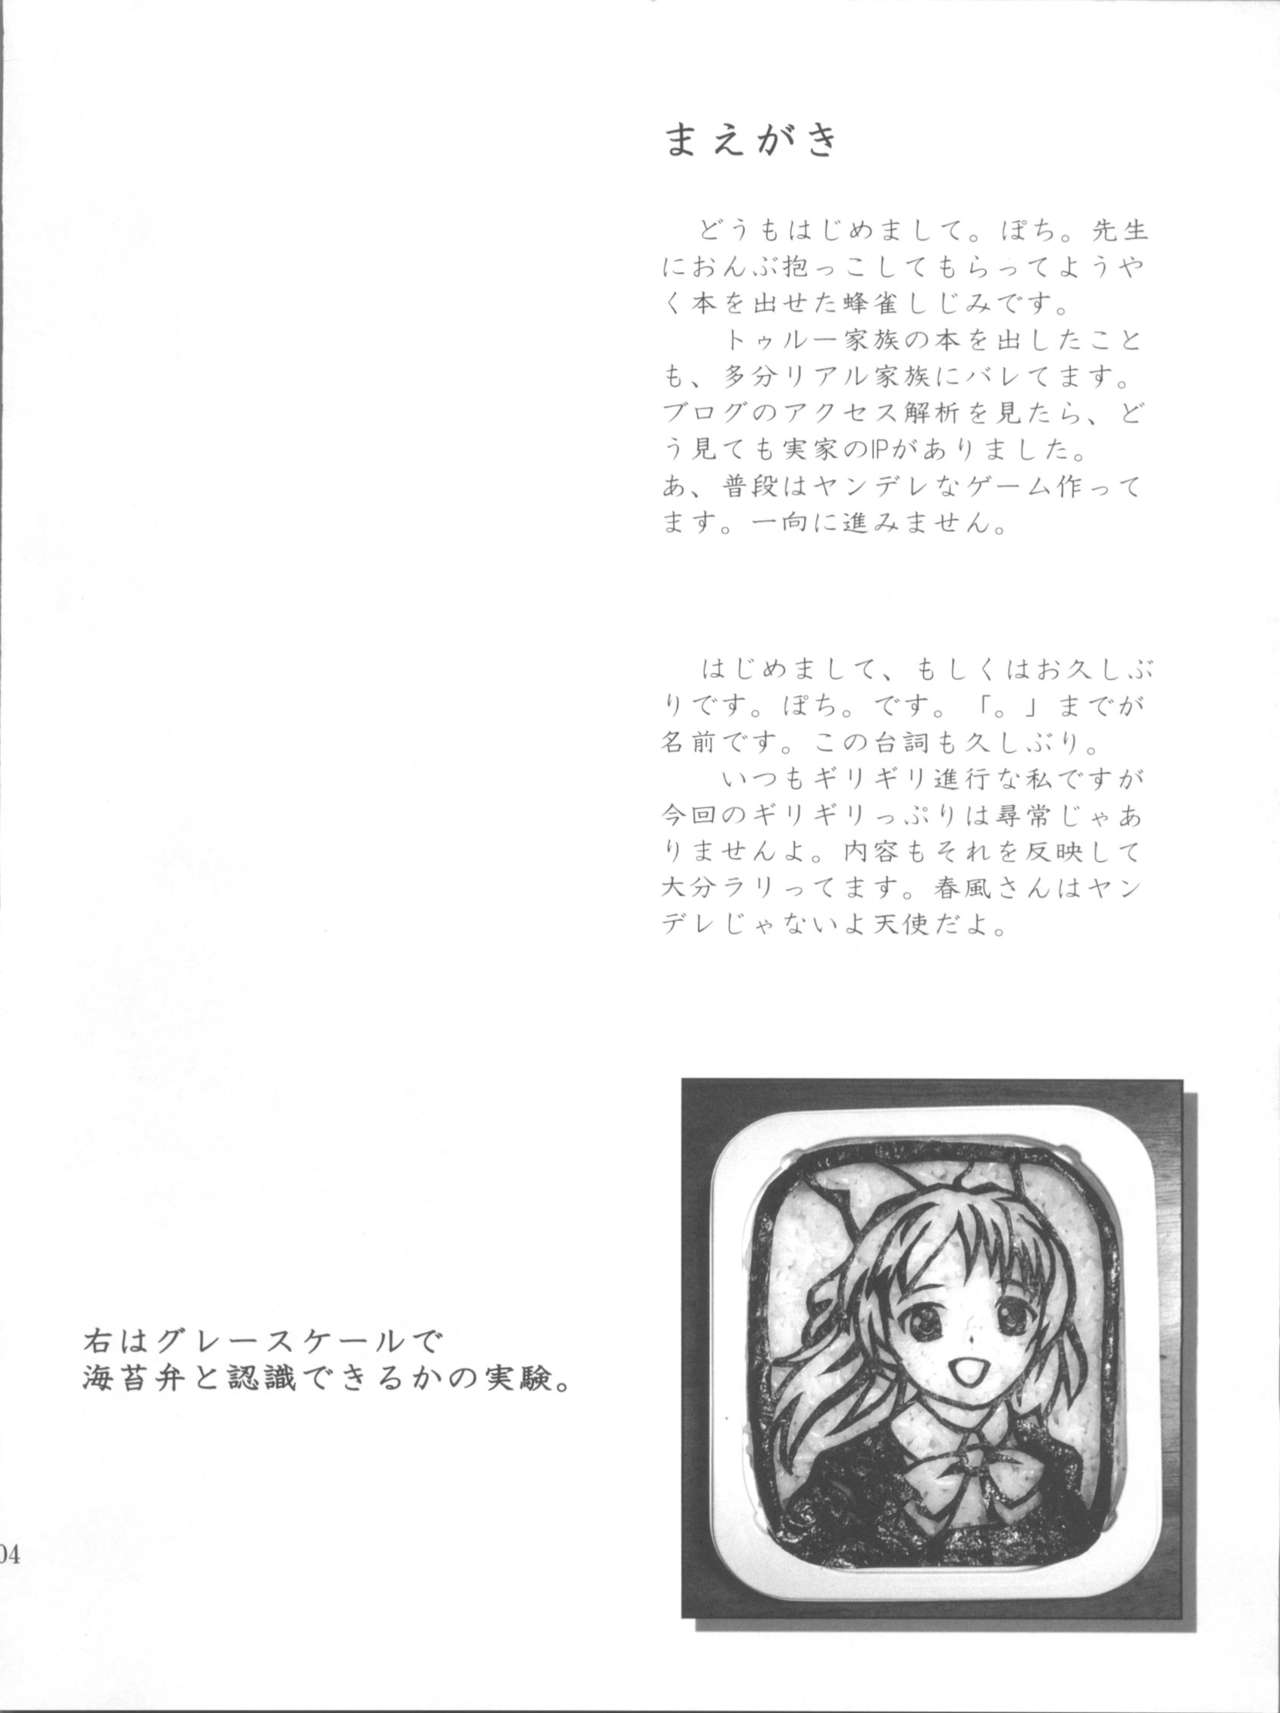 [Pochi-goya., Kumohitode of World (Pochi., Hachisuzume Shijimi)] Domestic Venus (Baby Princess) [ぽち小屋。, 世界のクモヒトデ (ぽち。, 蜂雀しじみ)] Domestic Venus (ベイビープリンセス)